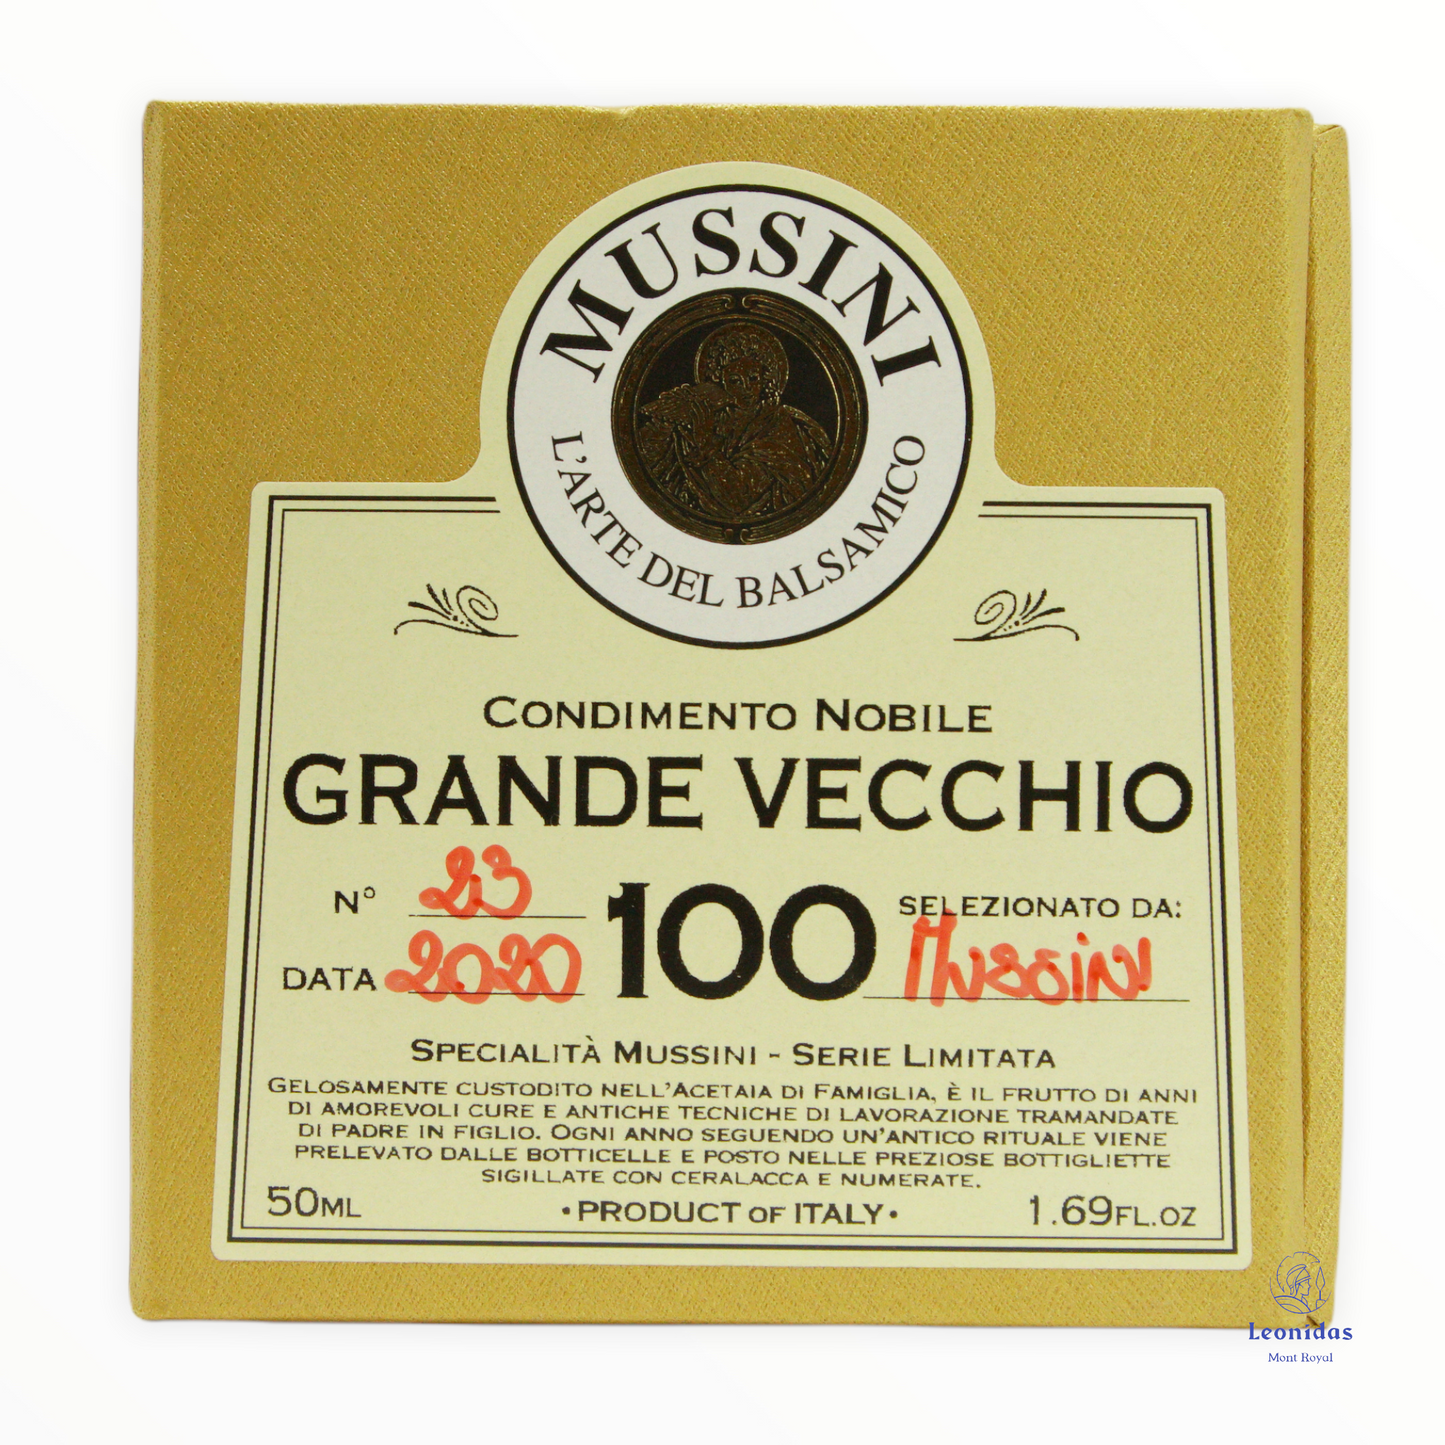 GRANDE VECCHIO Balsamic Vinegar Mussini 100 years old